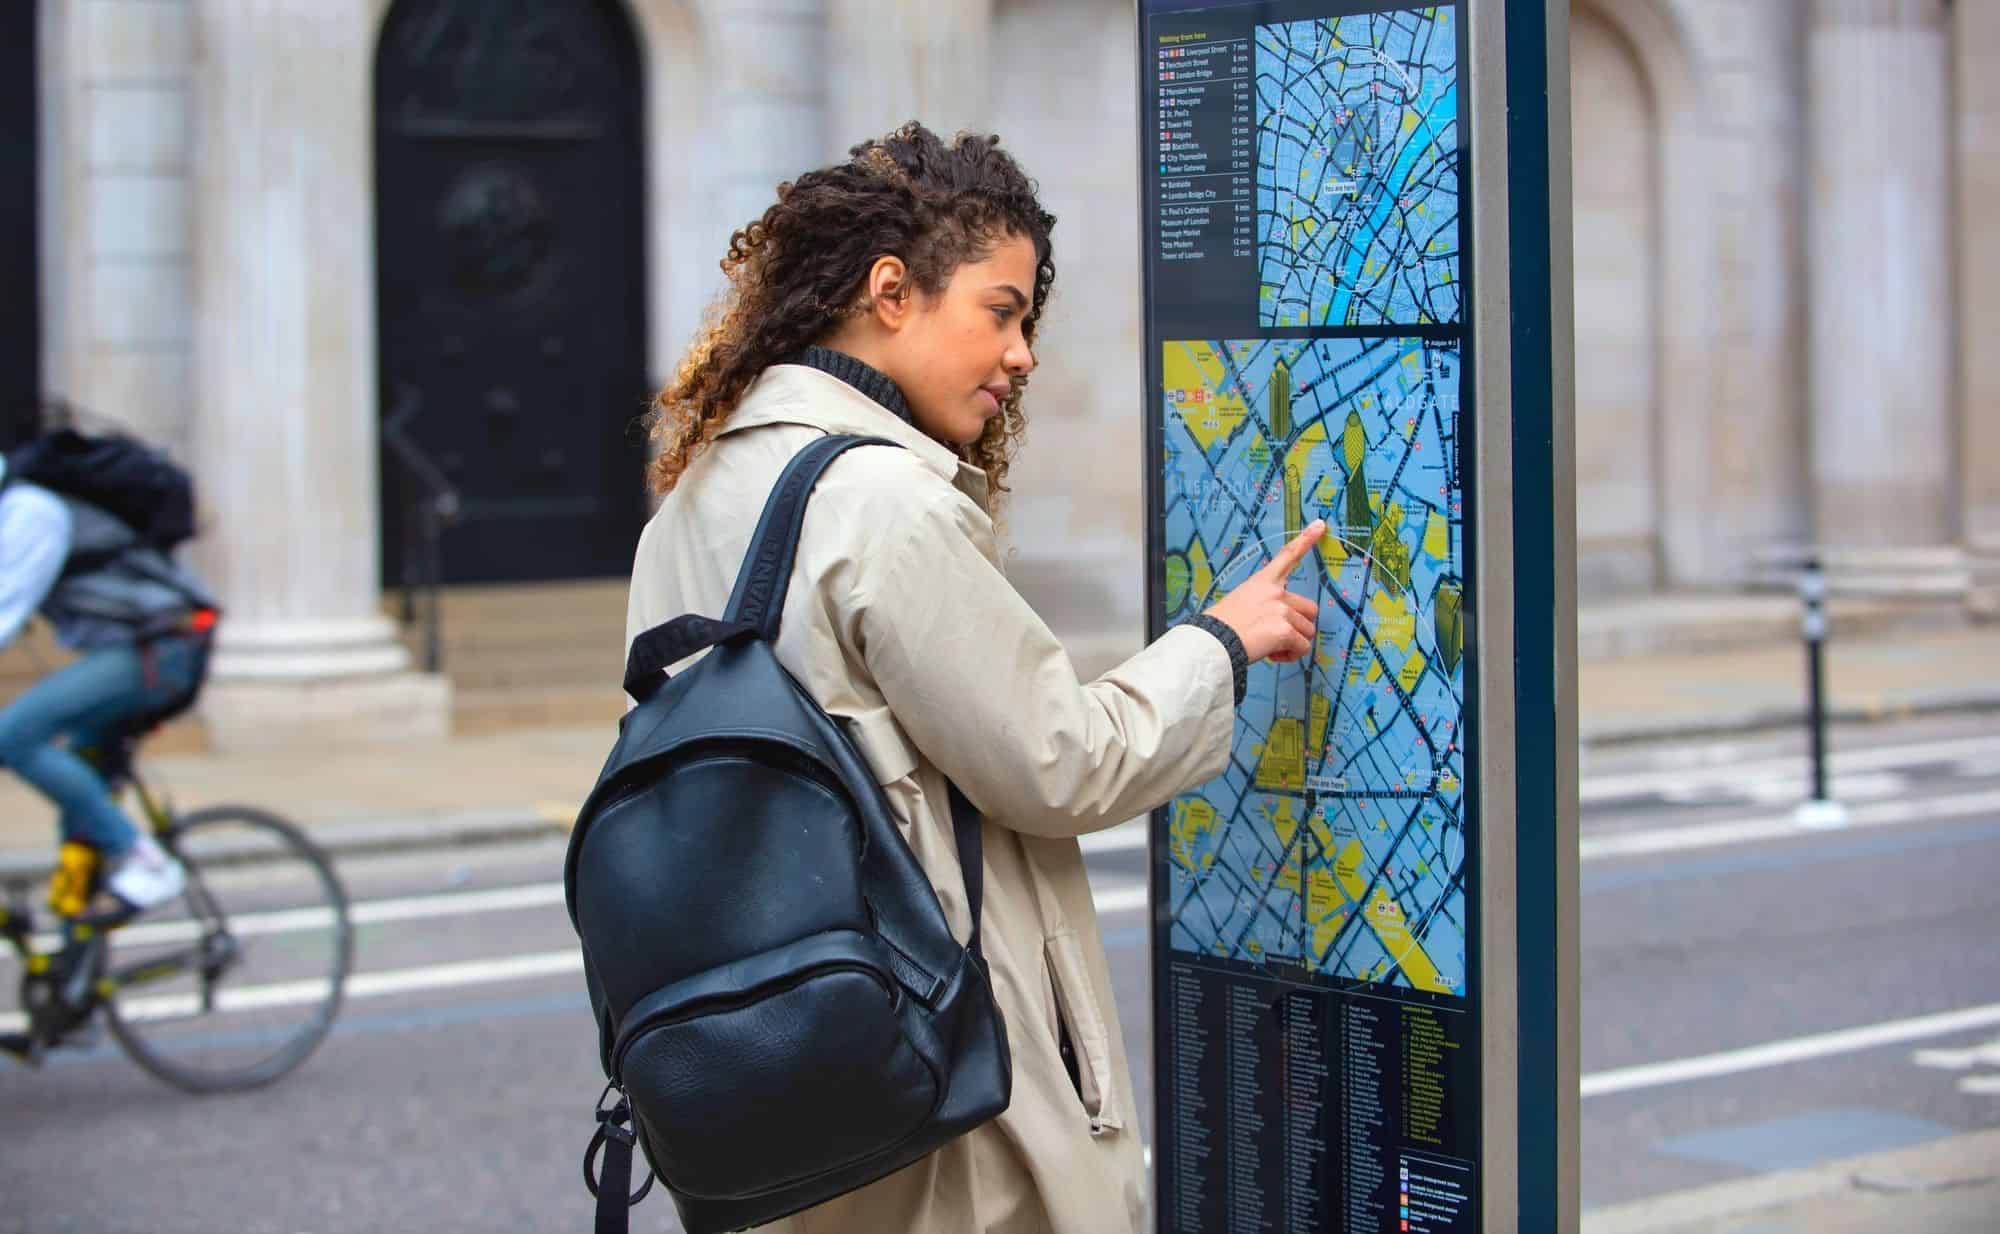 Transport for London's Legible London maps designed for pedestrians